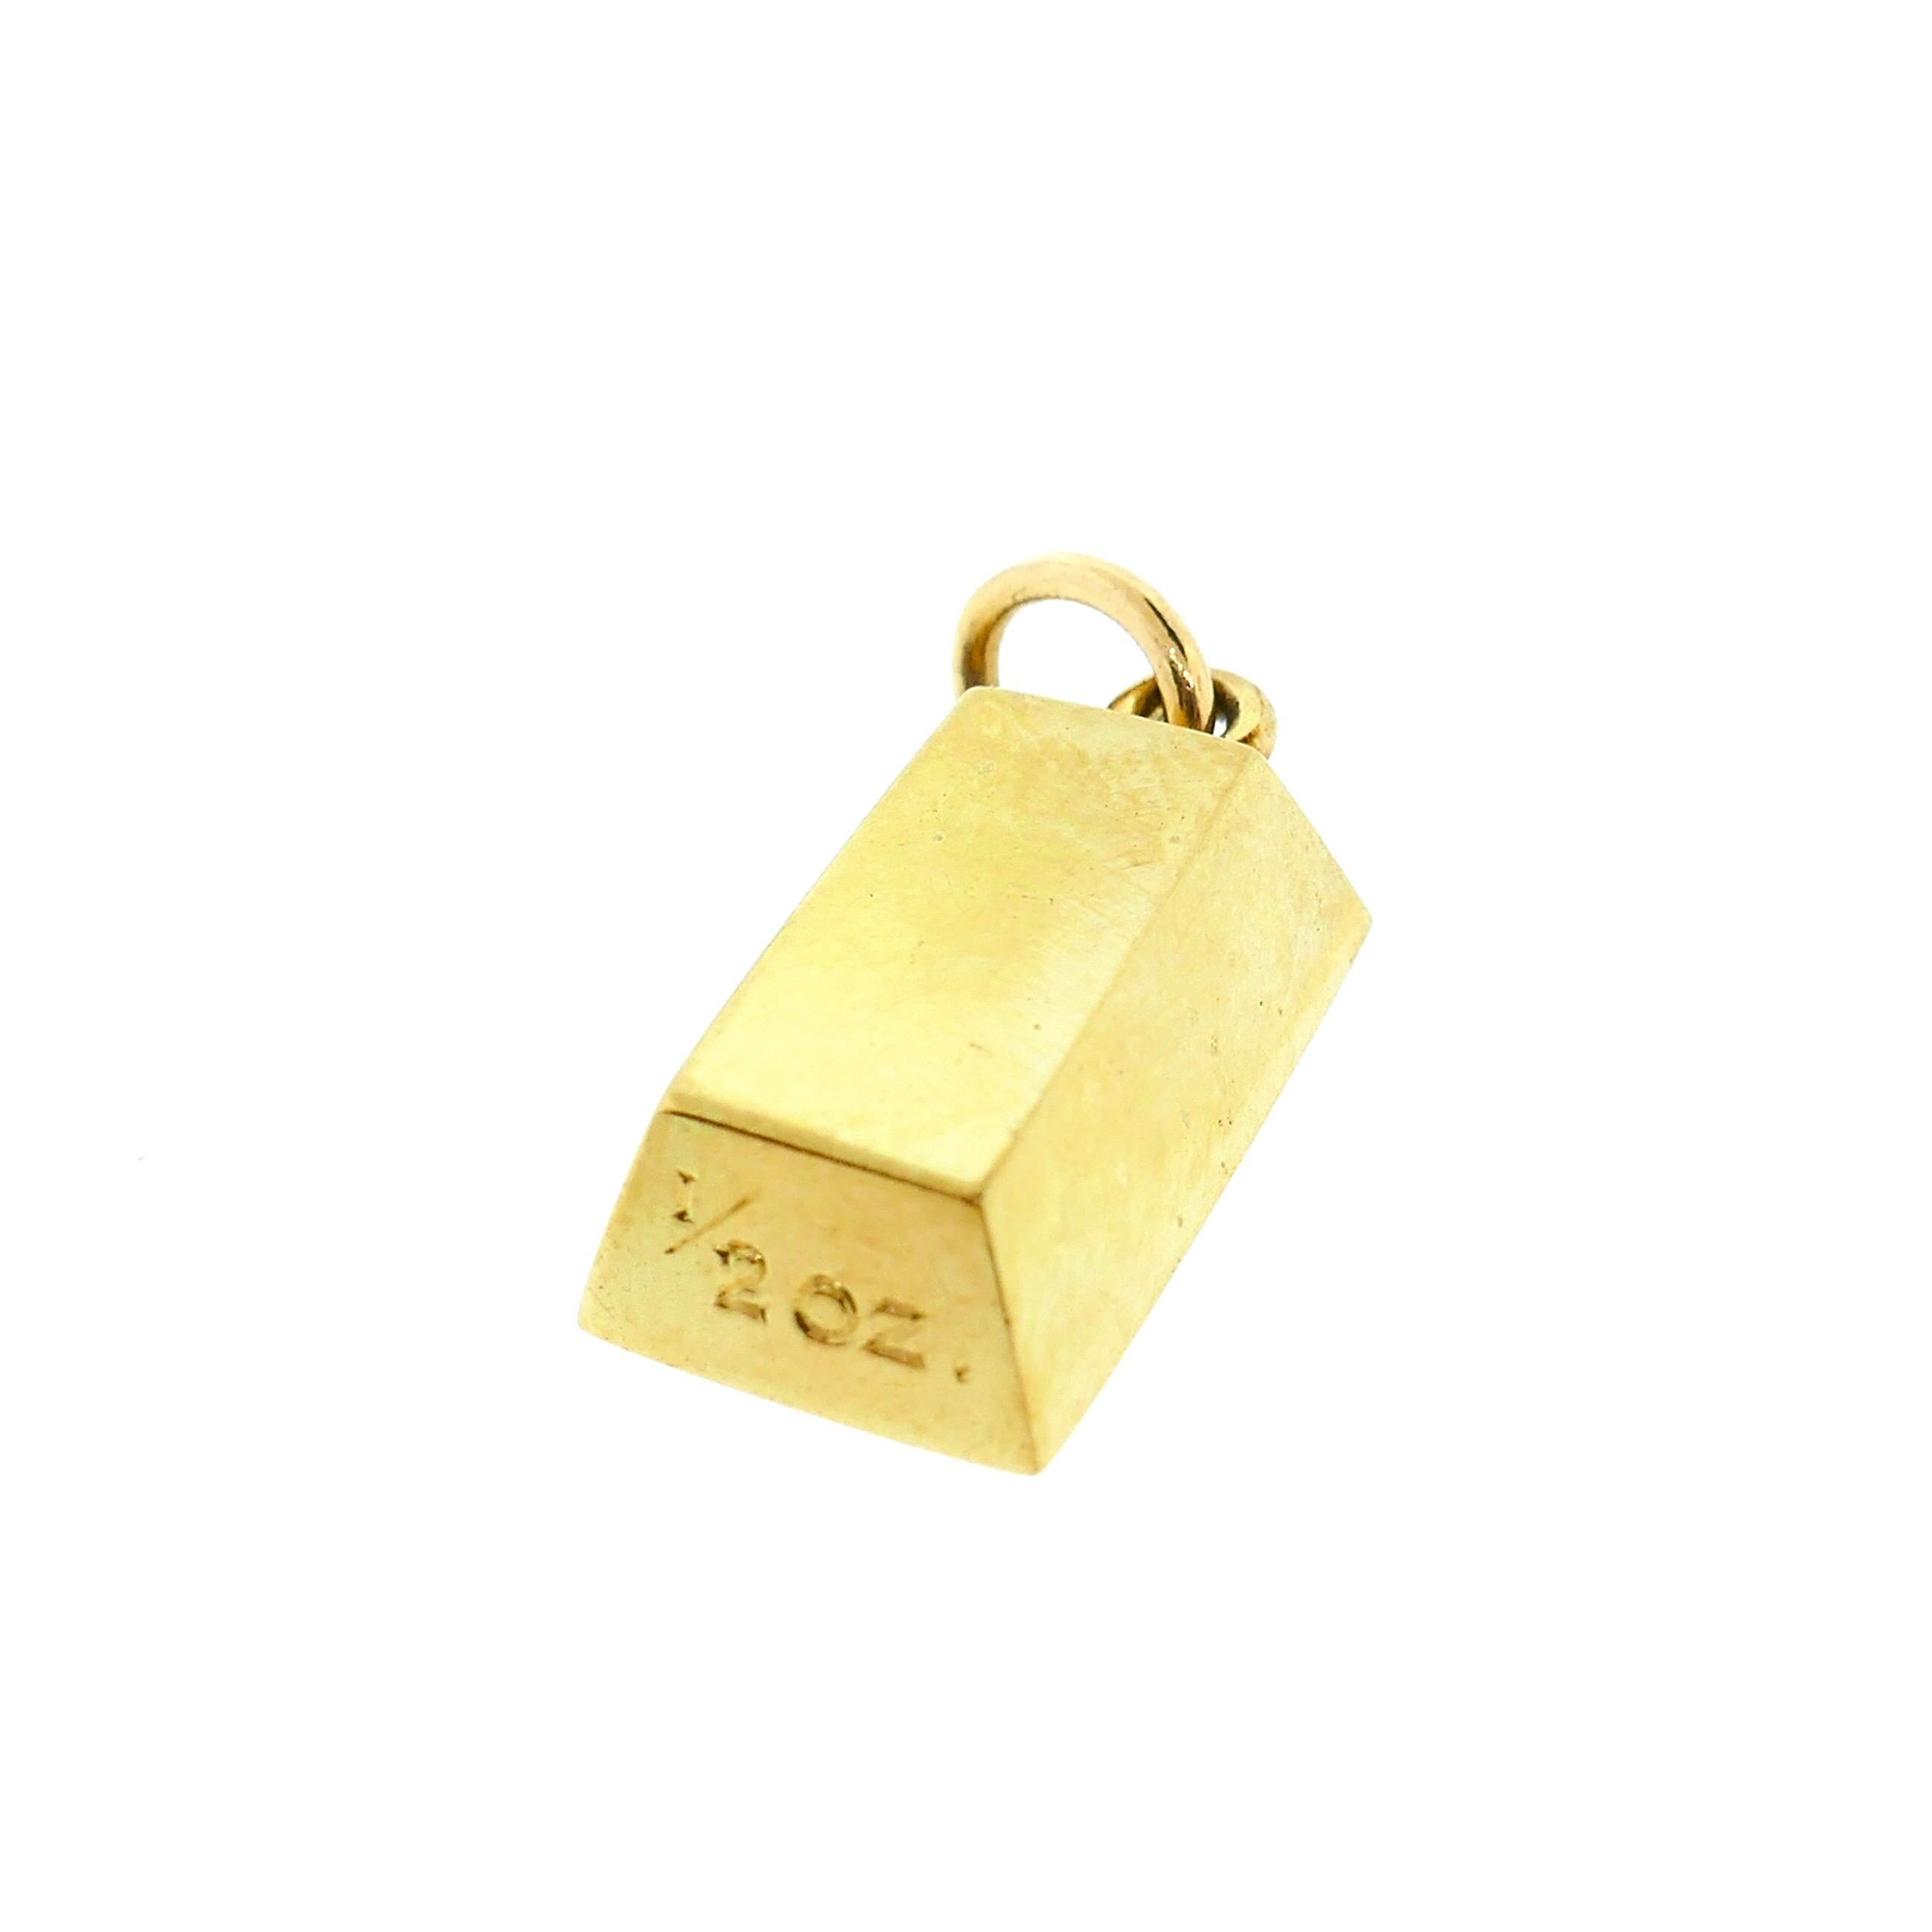 Cartier 18 Karat Yellow Gold 1/2 Oz Ingot Pendant / Charm

Weight: 15.6 Grams

Dimensions: 1.13